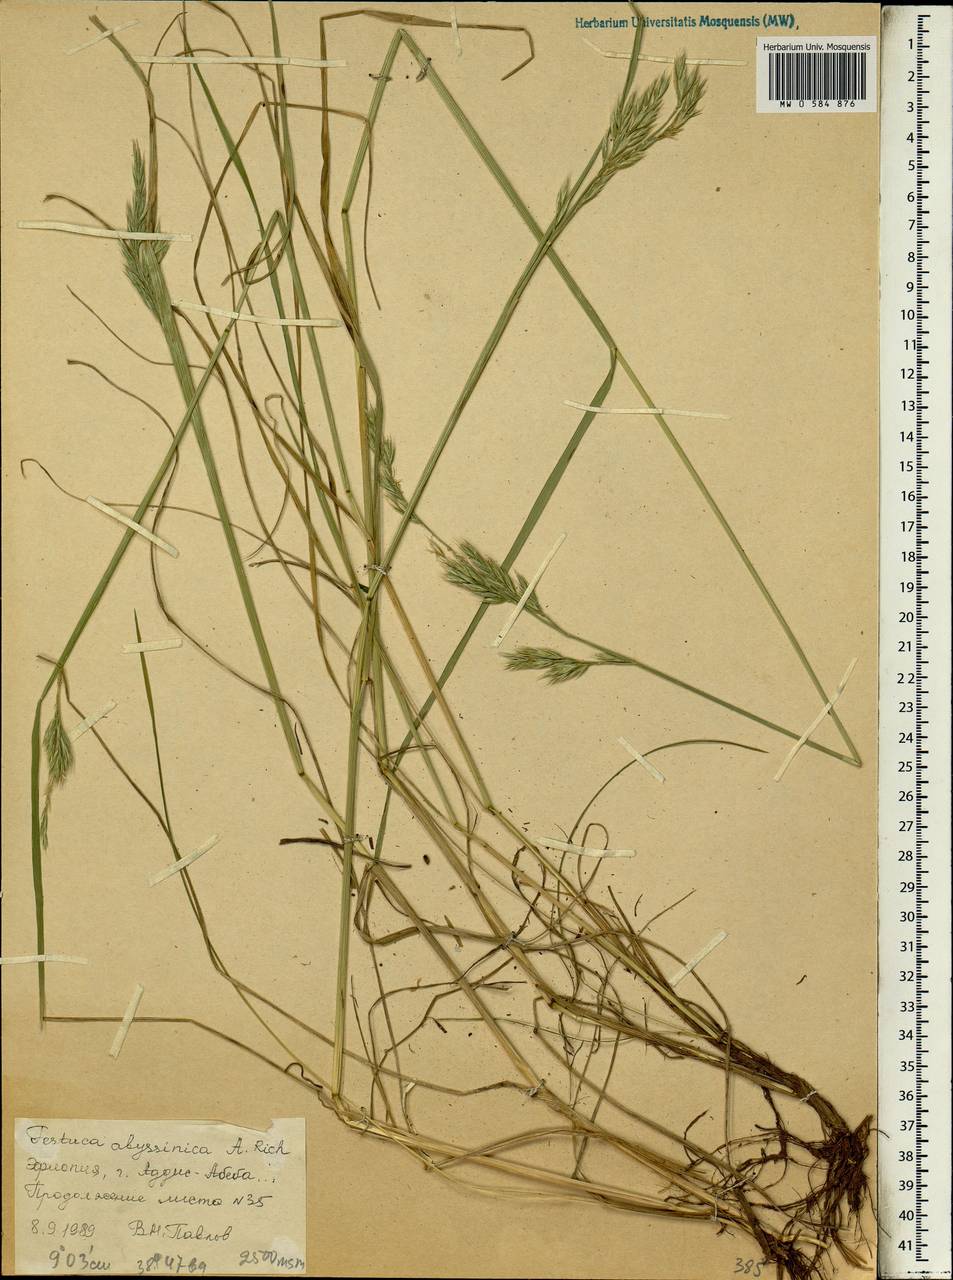 Festuca abyssinica A.Rich., Африка (AFR) (Эфиопия)